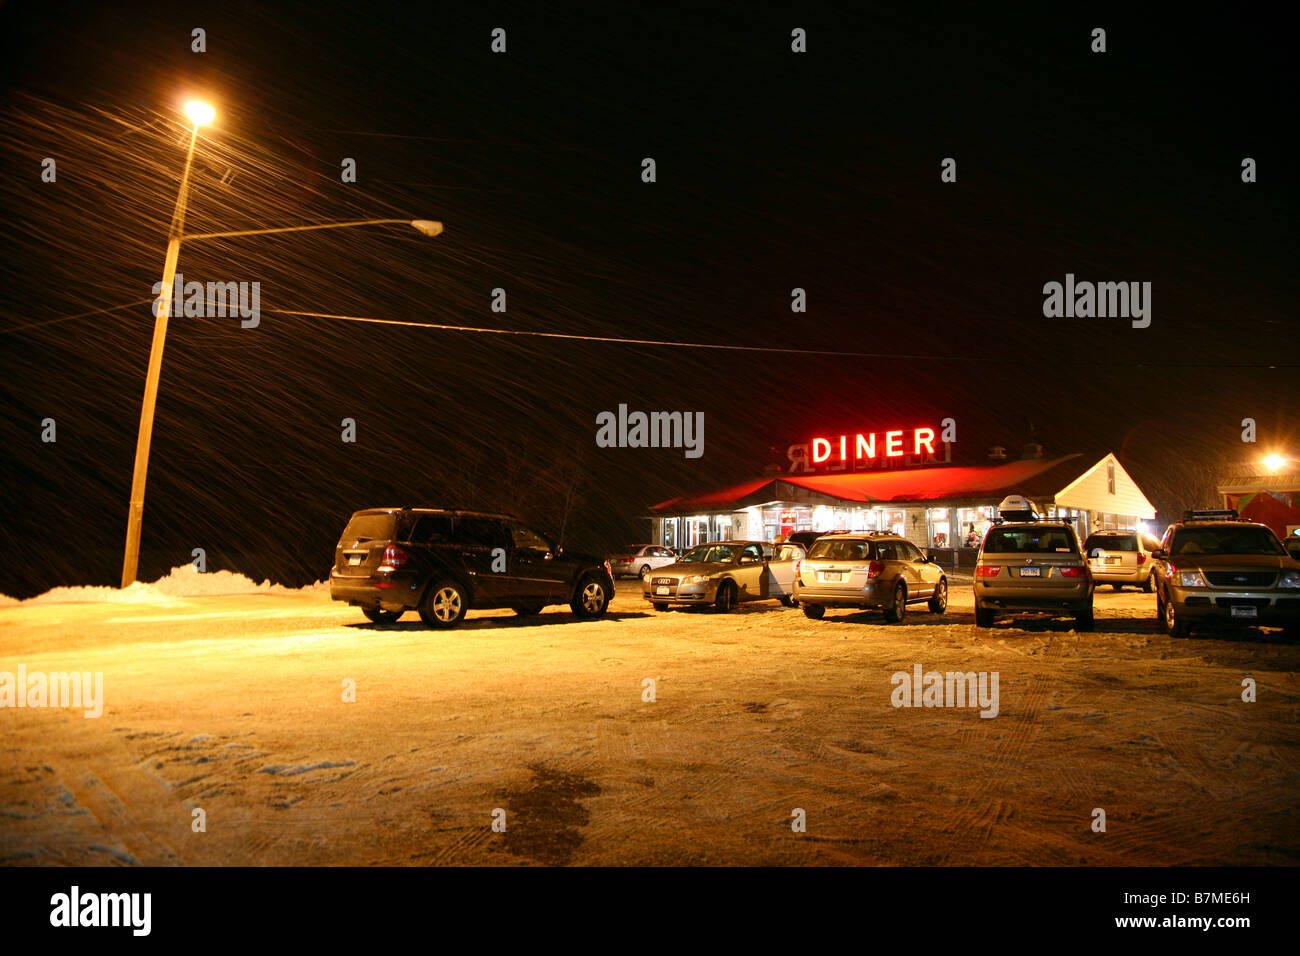 Diner illuminated at night in a snowstorm, Chatham, NY, USA Stock Photo